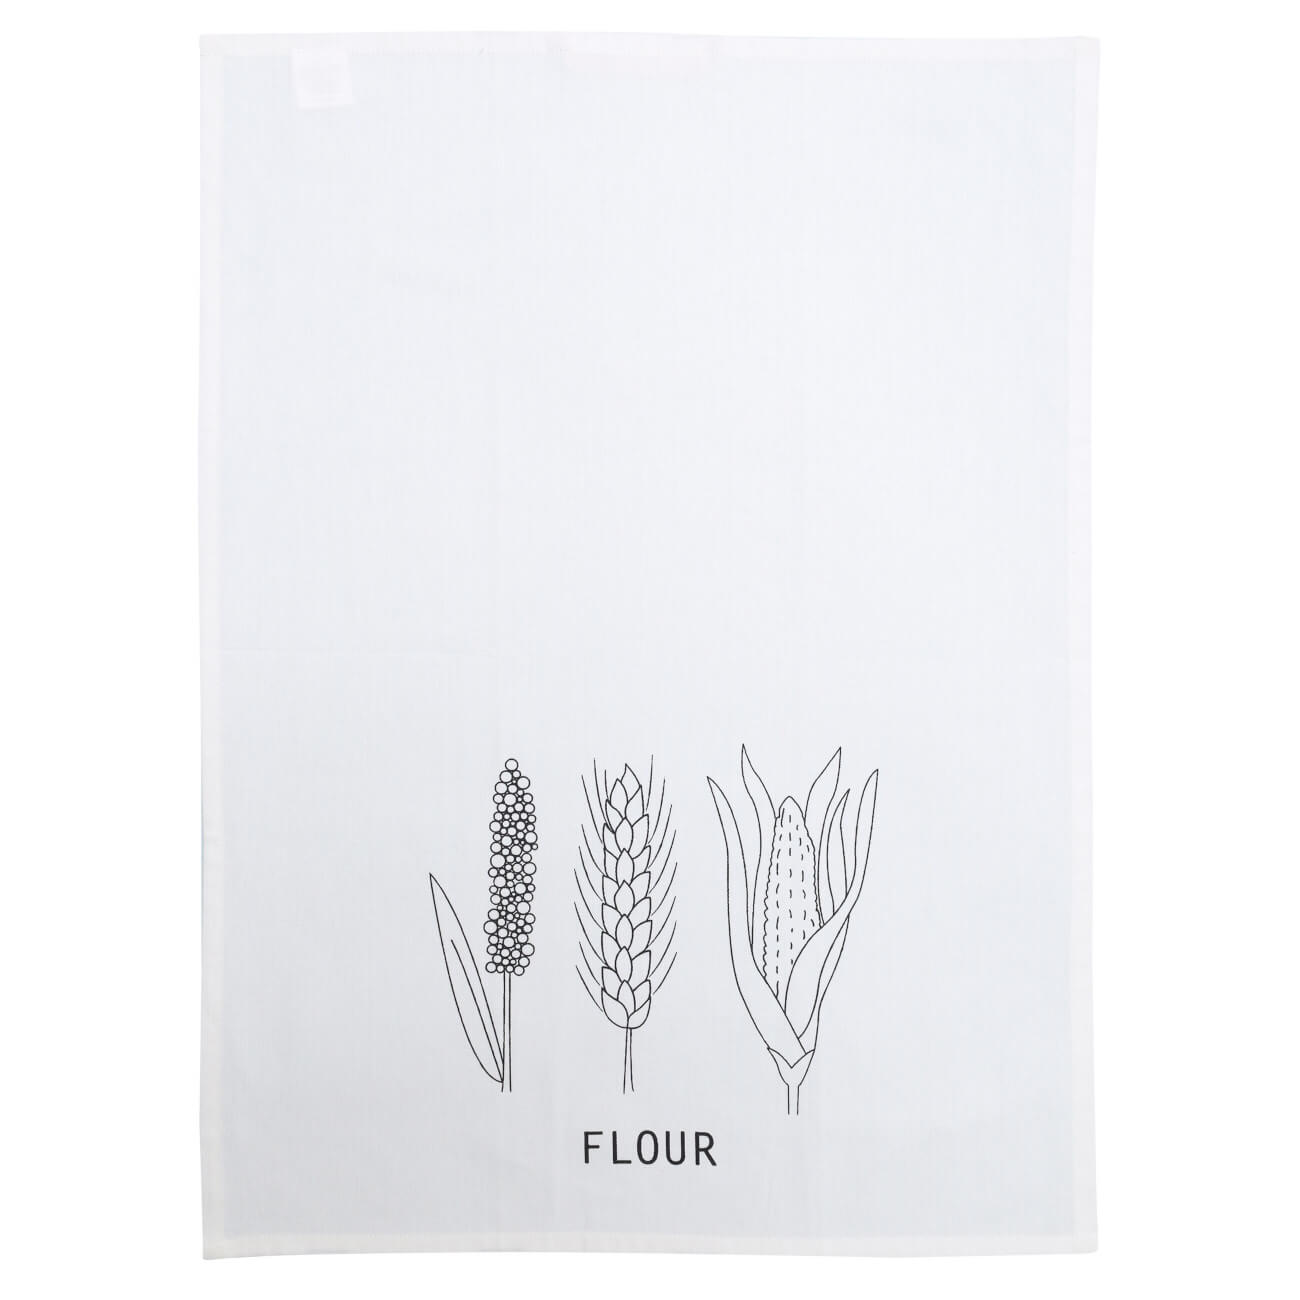 Полотенце кухонное, 51х71 см, хлопок, белое, Злаки, Harvest print